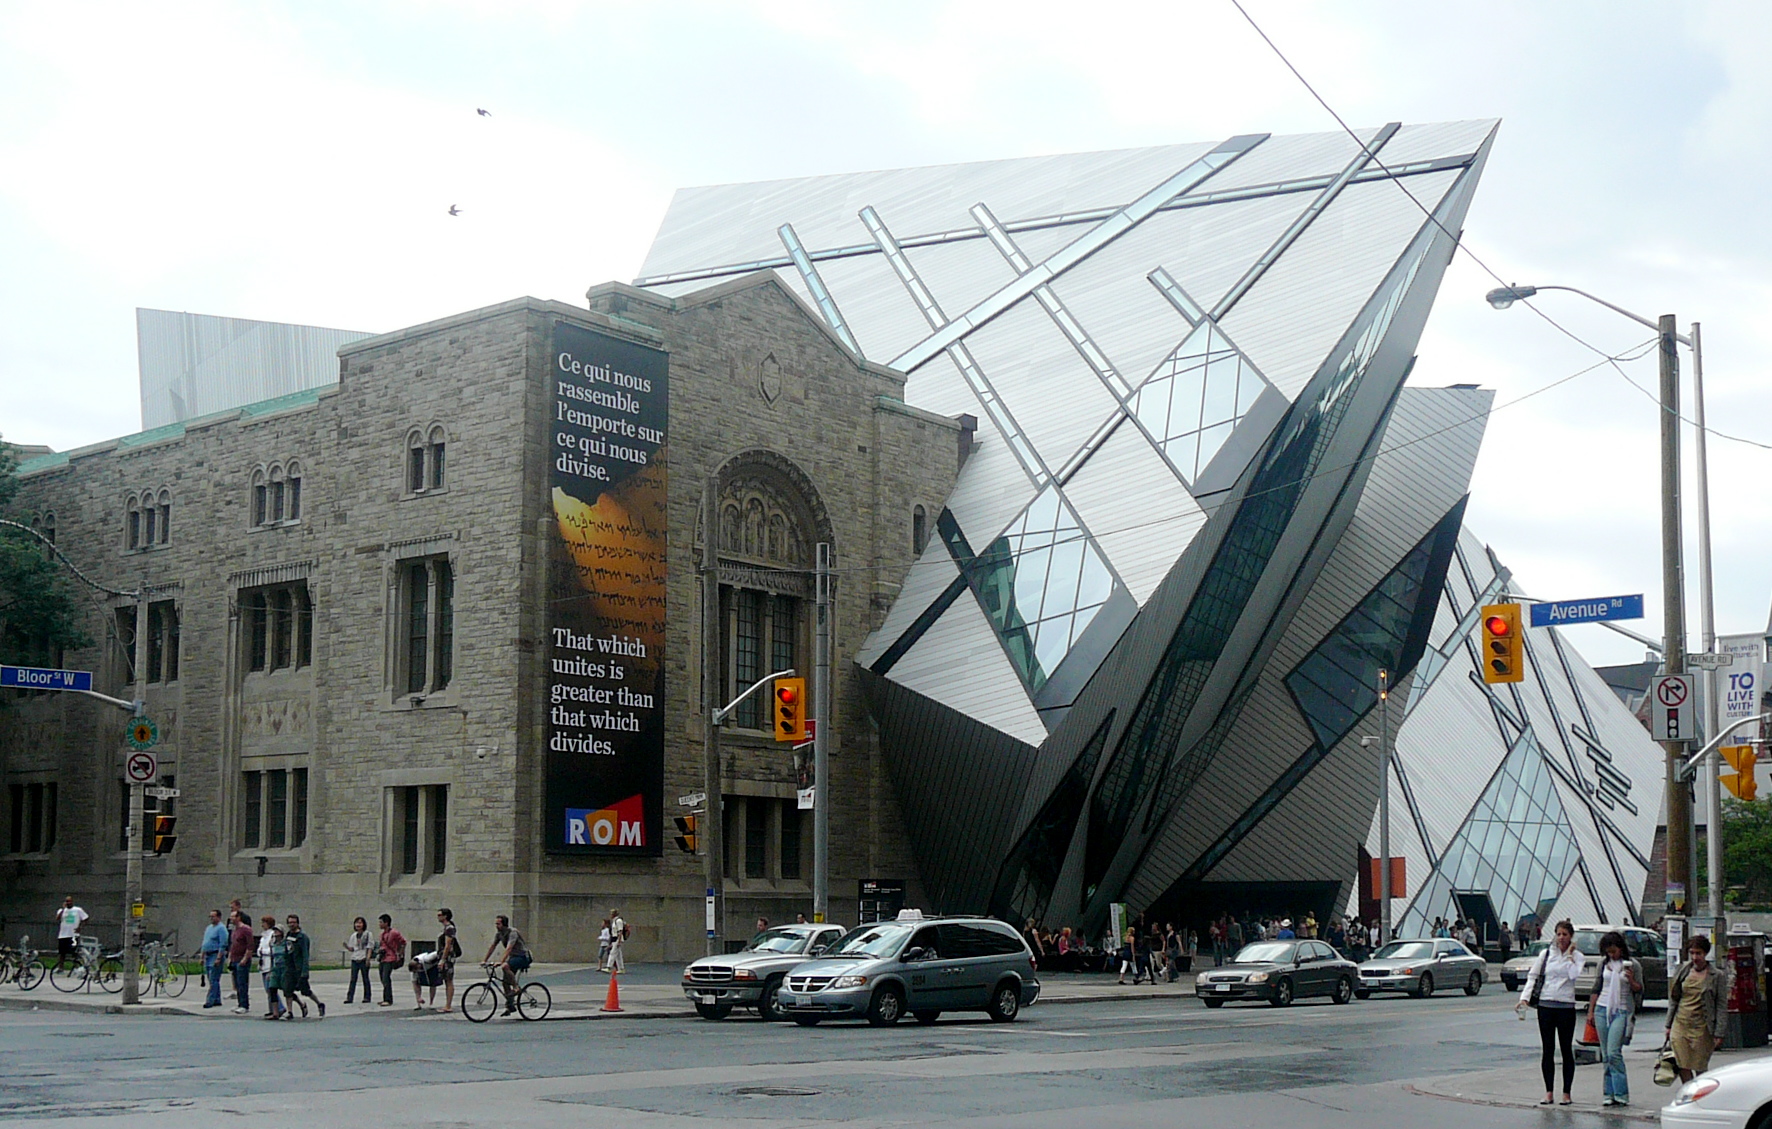 The Royal Ontario Museum, ©2009 Steve Harris